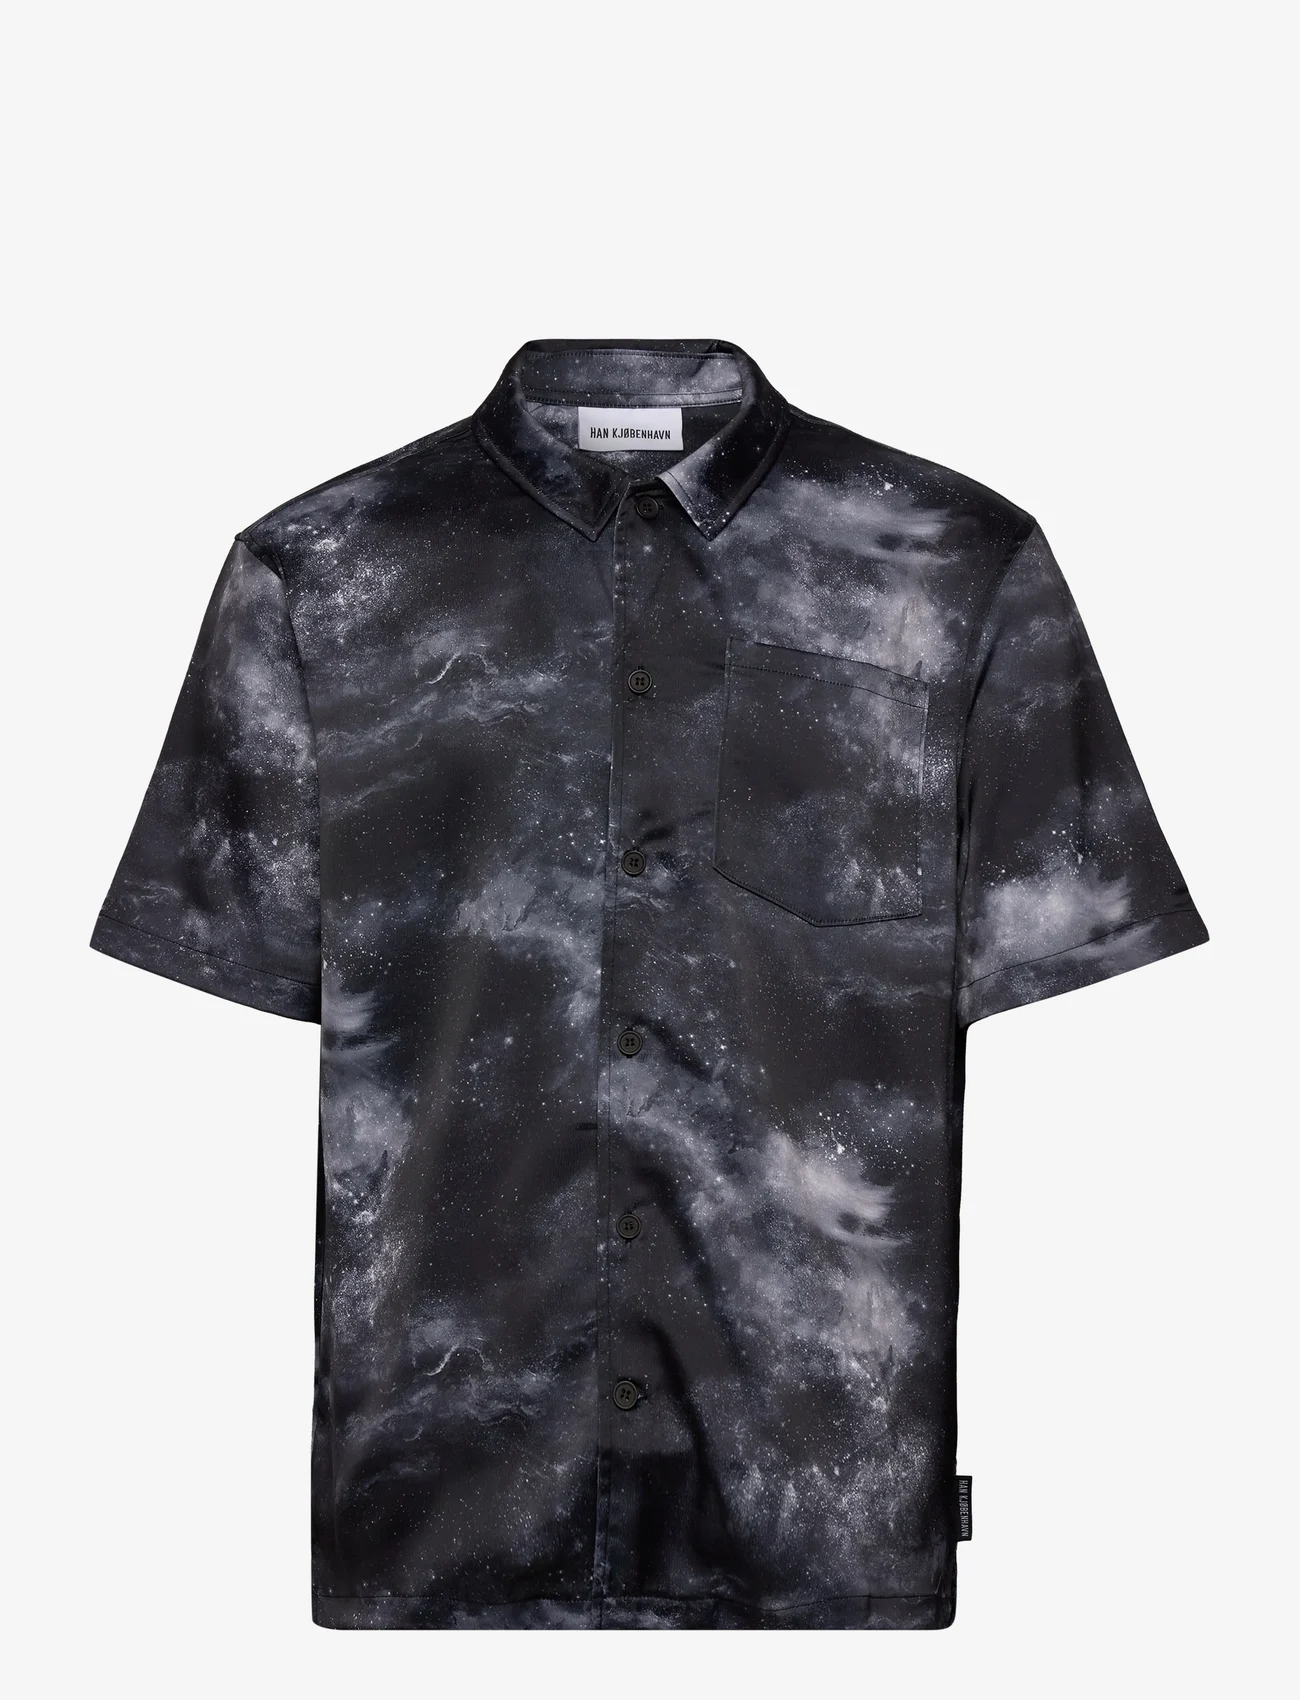 HAN Kjøbenhavn - Printed Summer Shirt Short Sleeve - marškiniai trumpomis rankovėmis - grey - 0